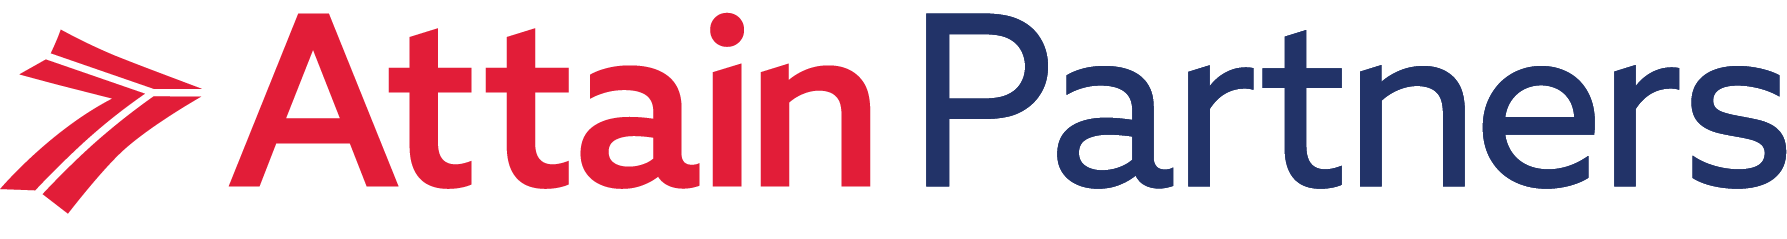 Attain_PartnersBlueHorz_Logo